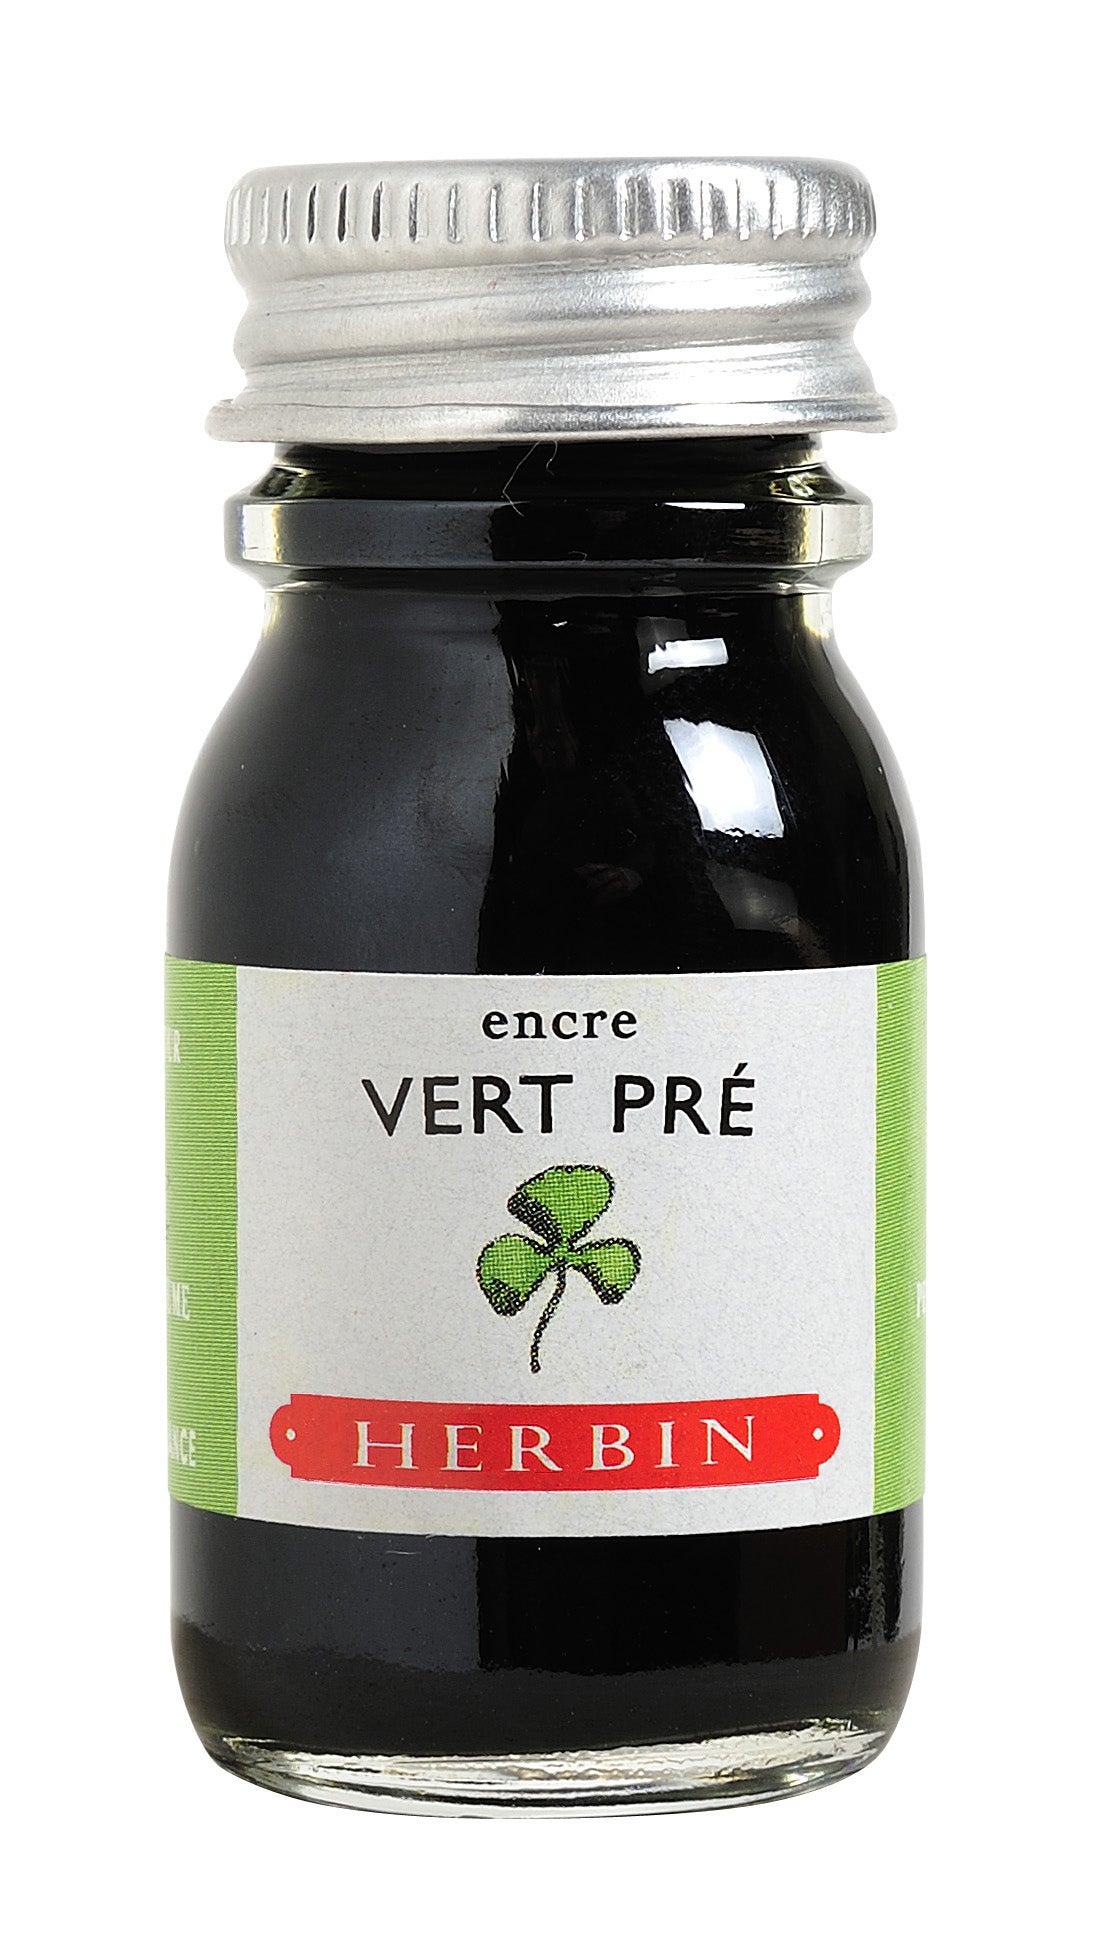 Herbin ink bottle clover green 10 ml / vert pre